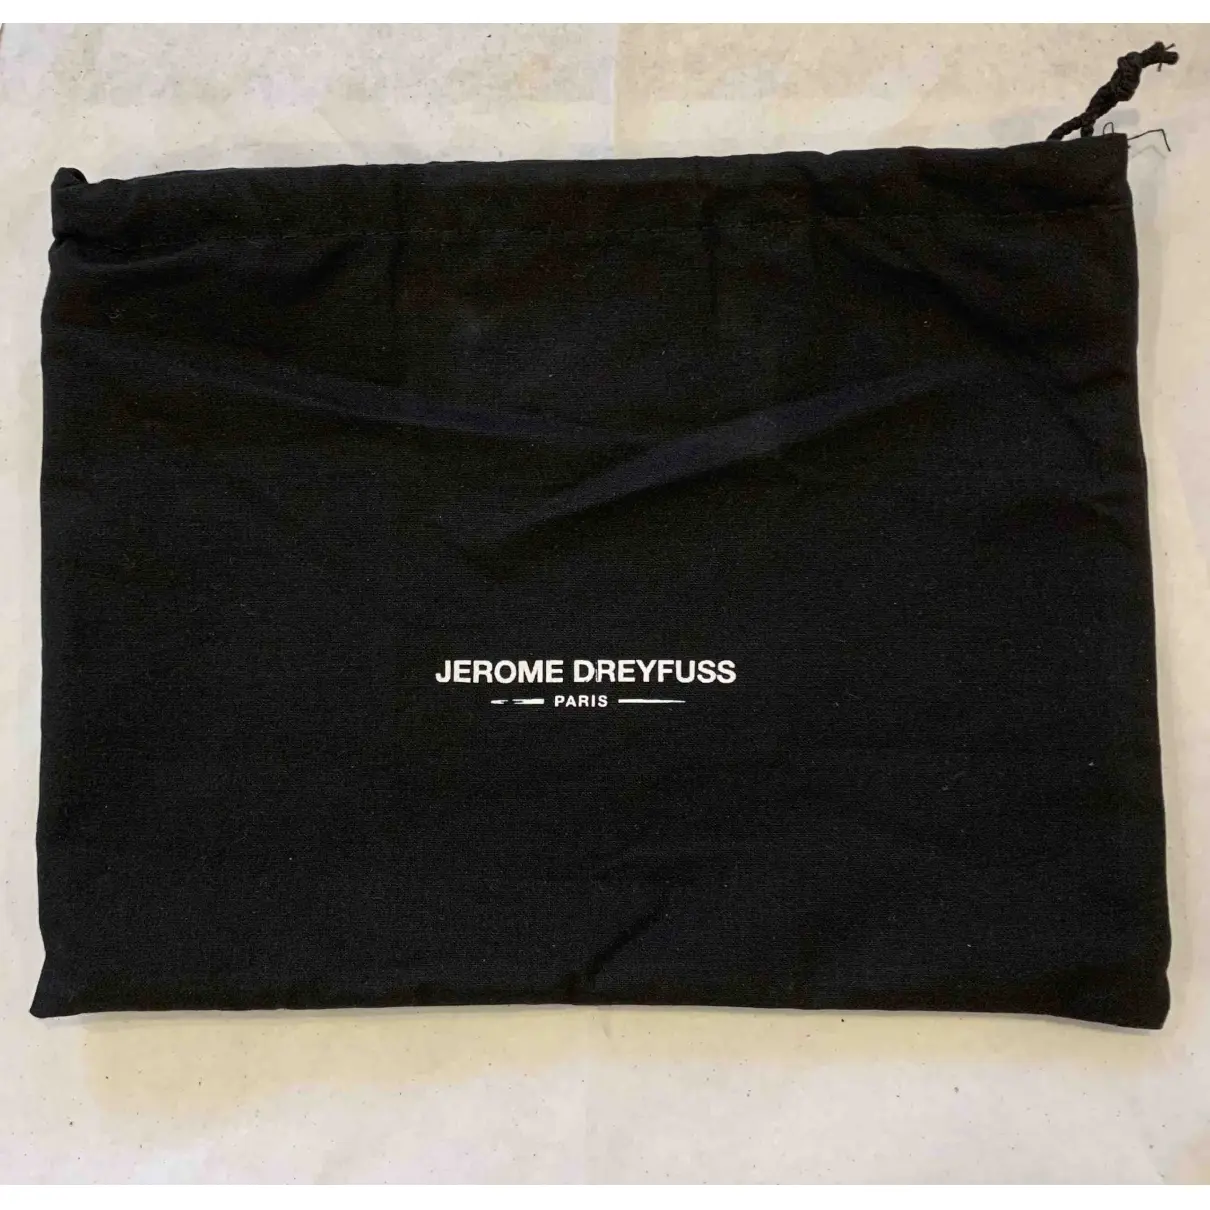 Buy Jerome Dreyfuss Leather clutch bag online